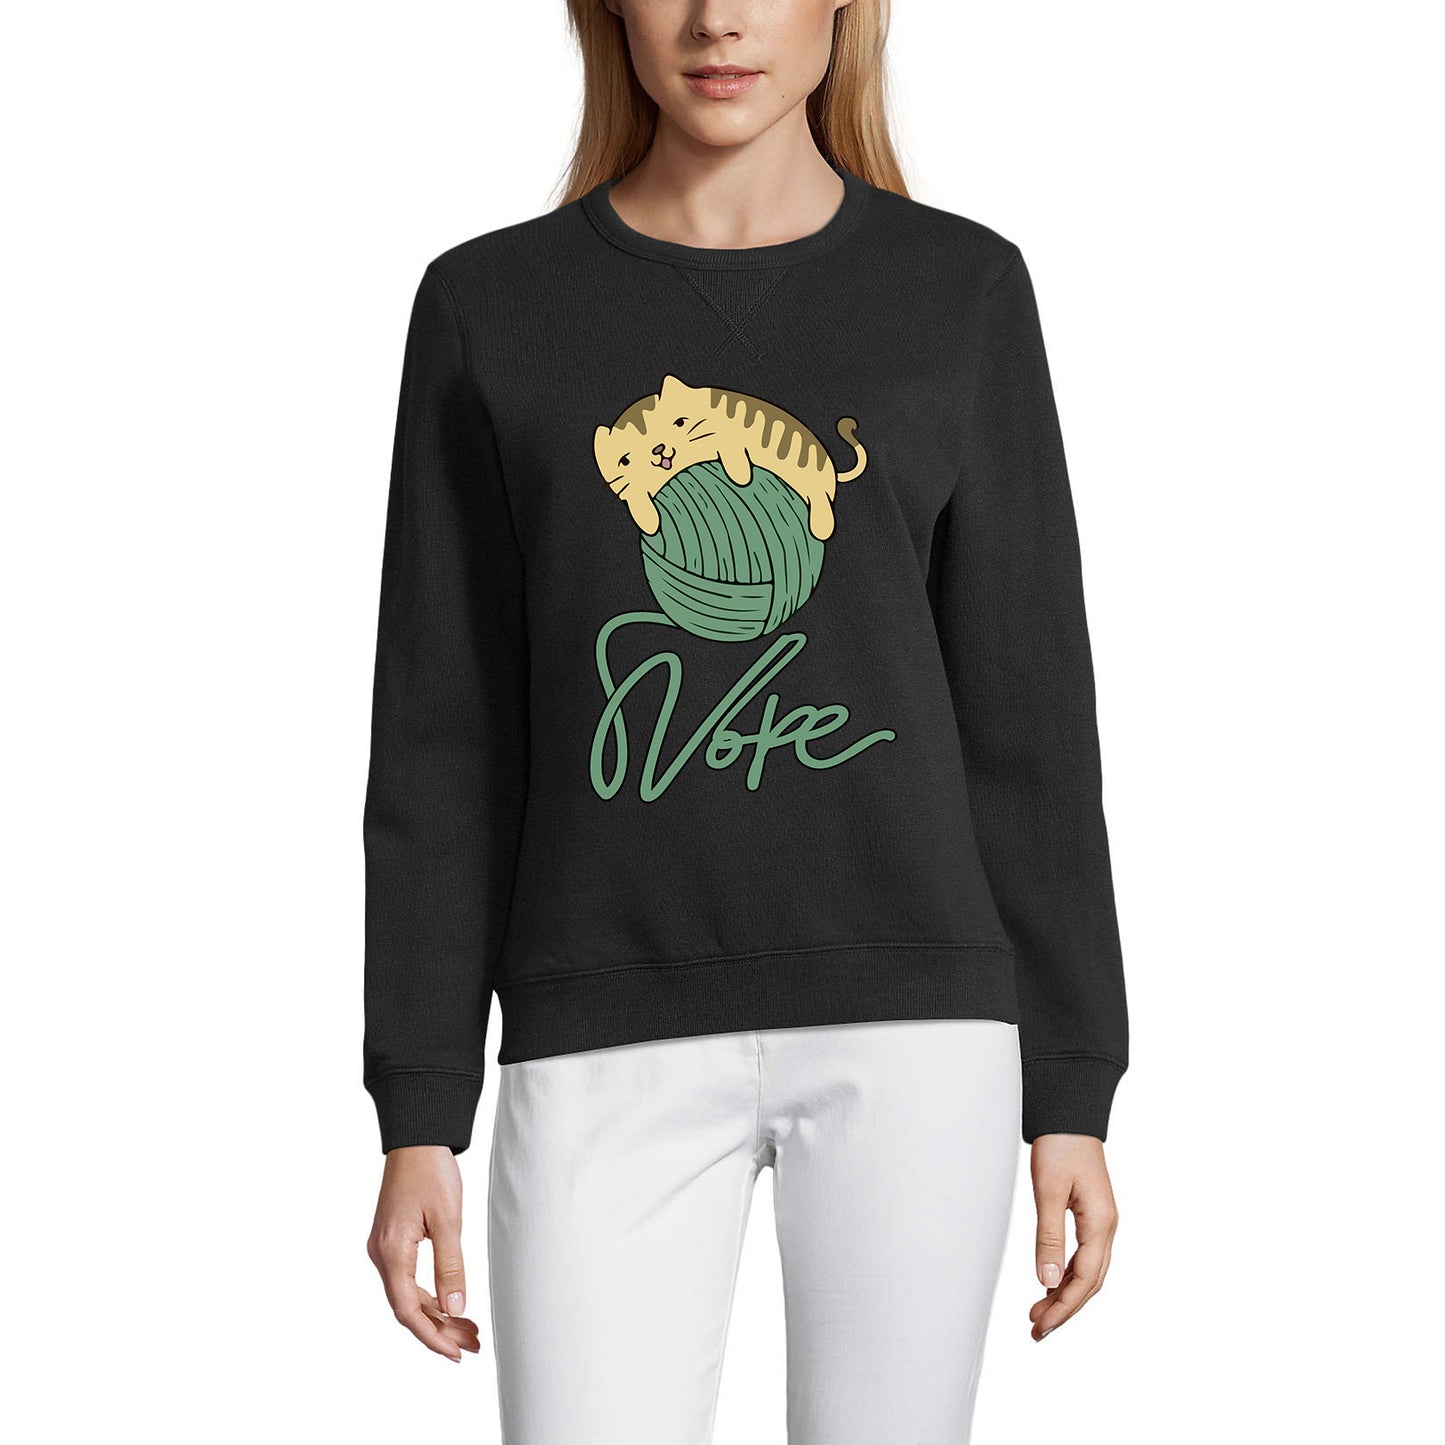 ULTRABASIC Women's Sweatshirt Nope - Gift for Cat Lovers - Cat's Life